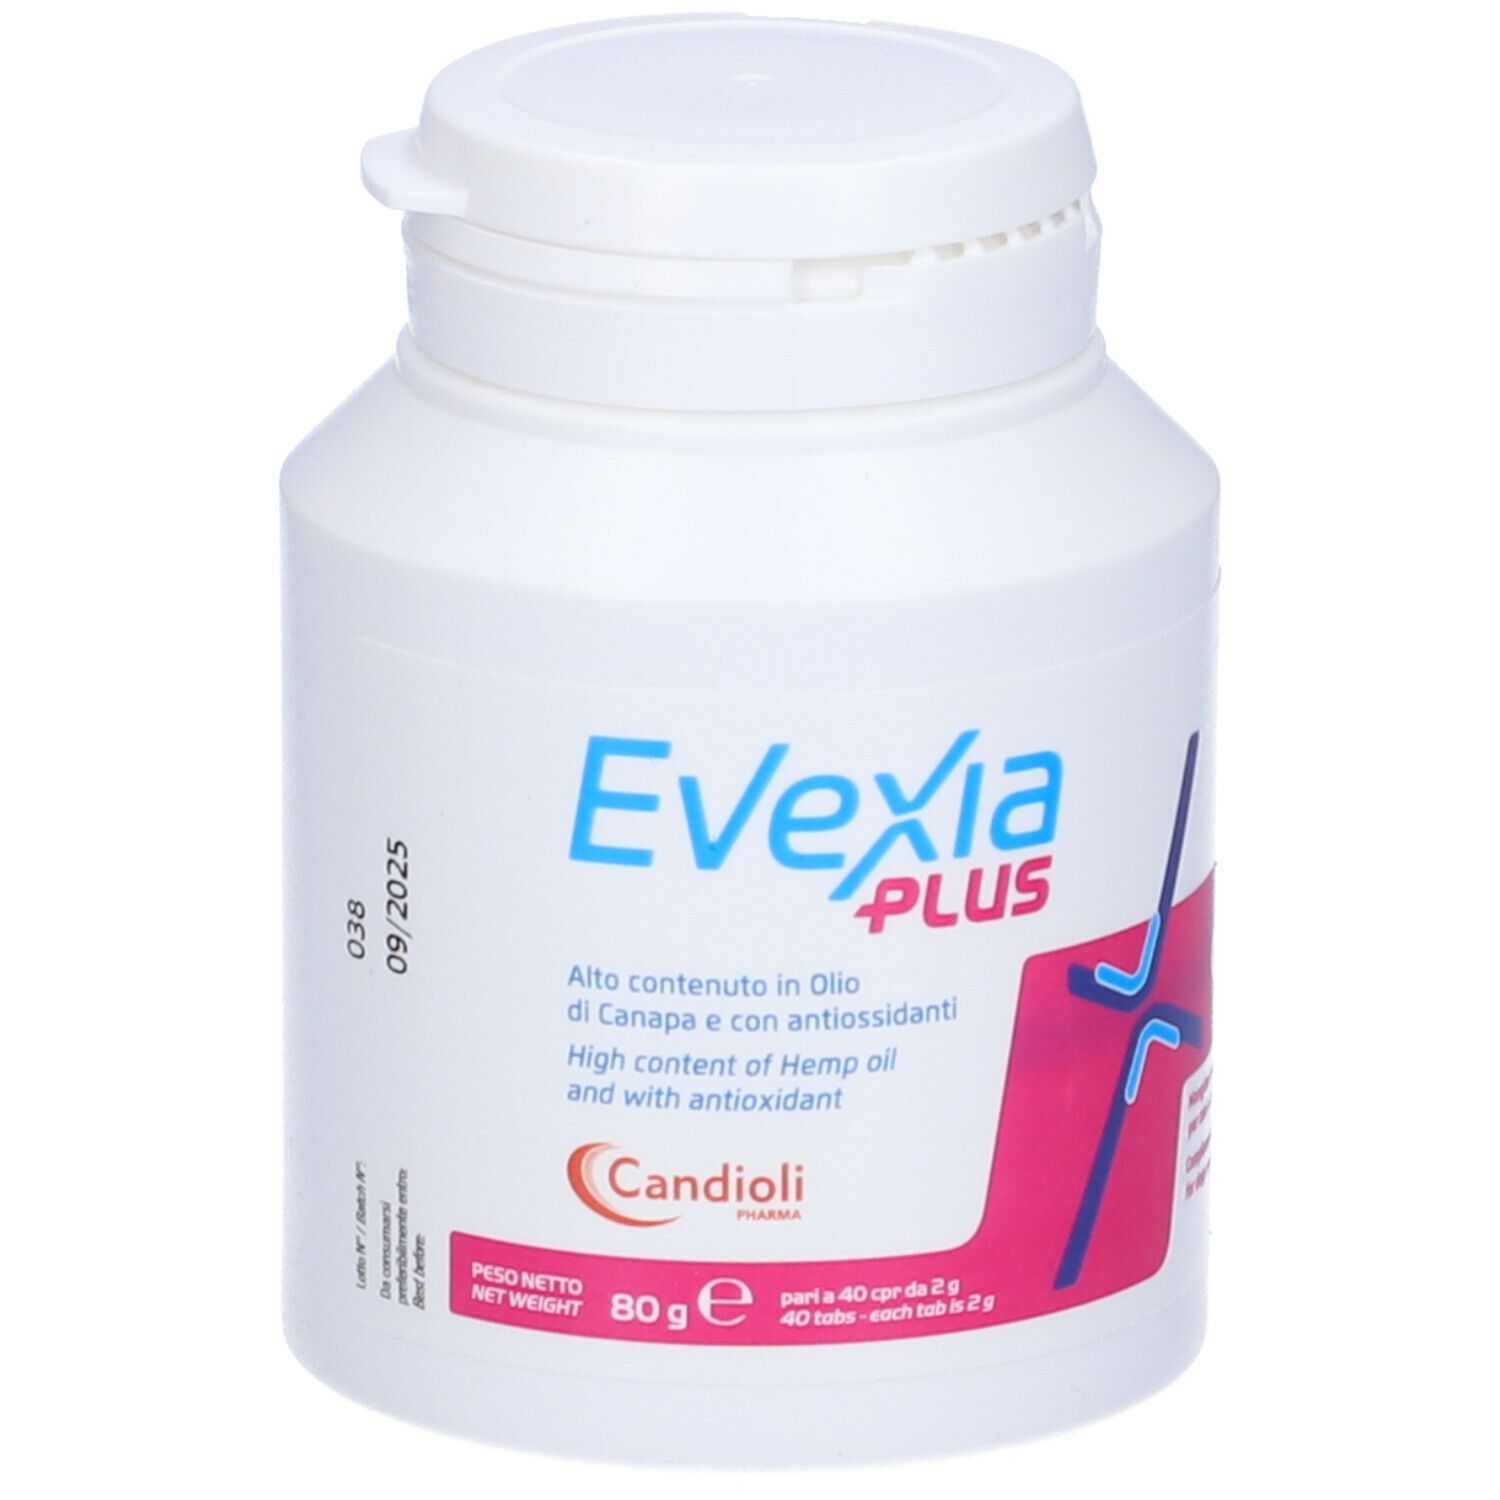 Candioli Pharma Evexia Plus Compresse